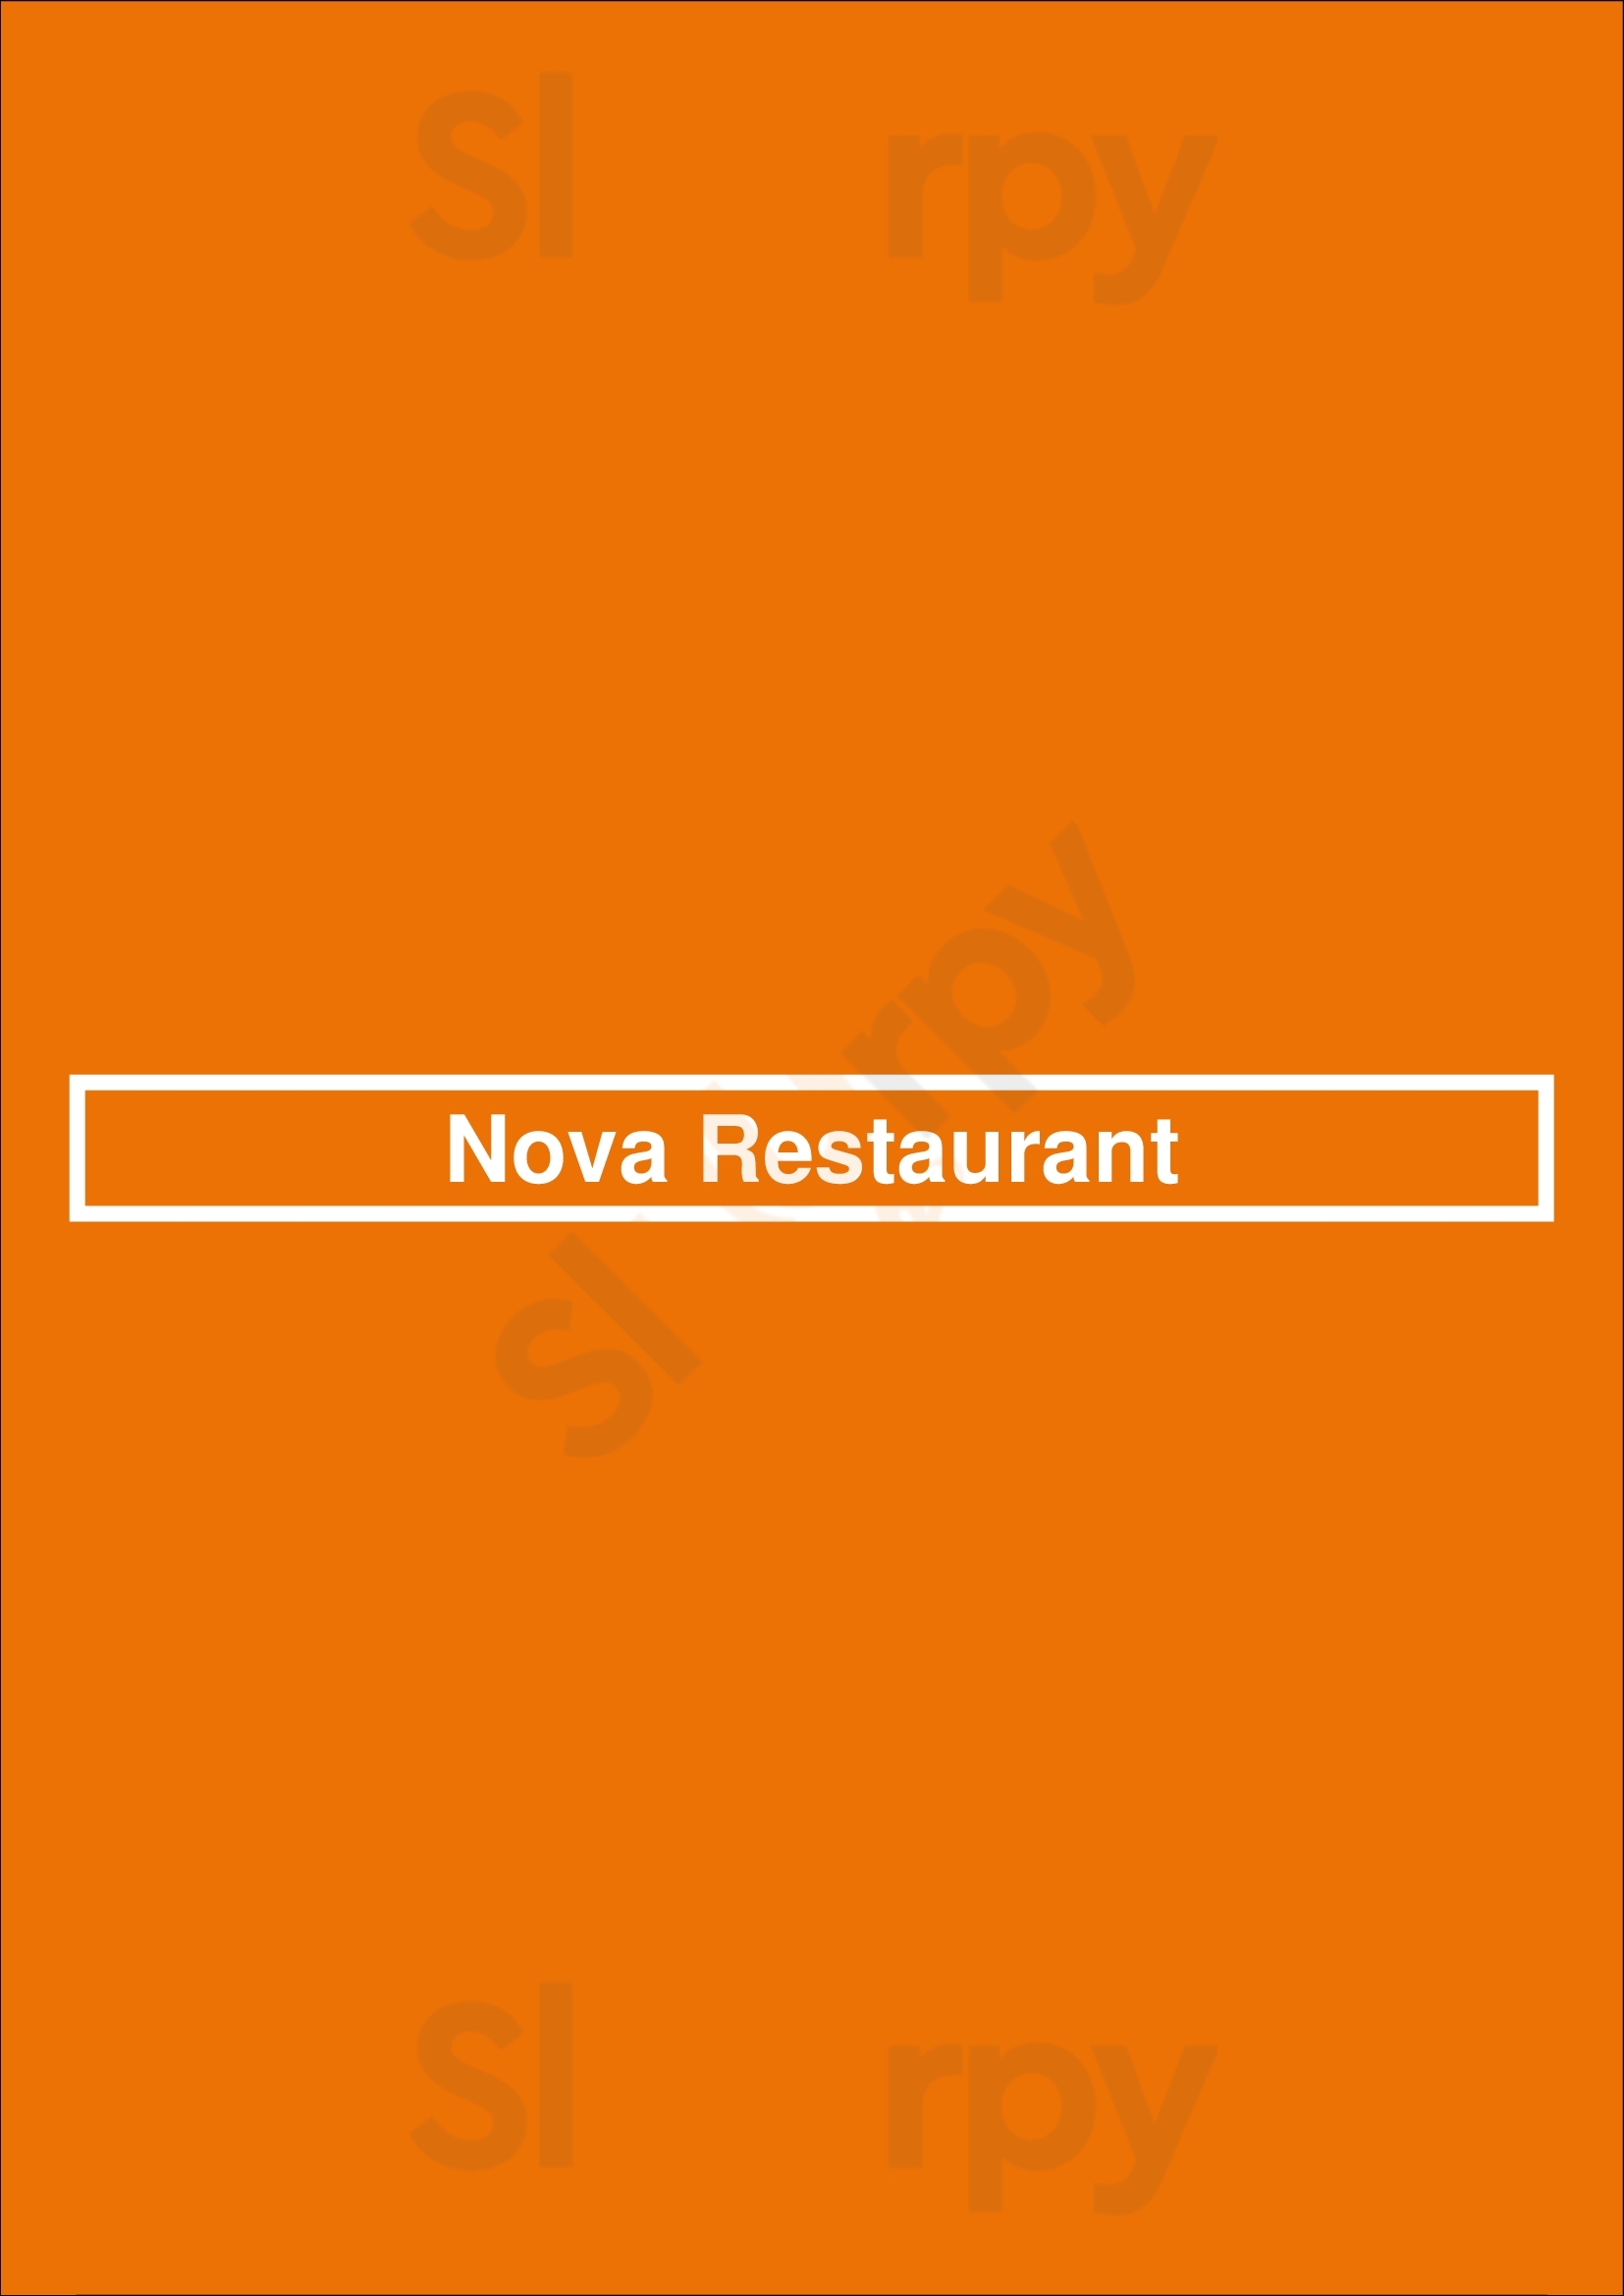 Nova Restaurant Dalkey Menu - 1